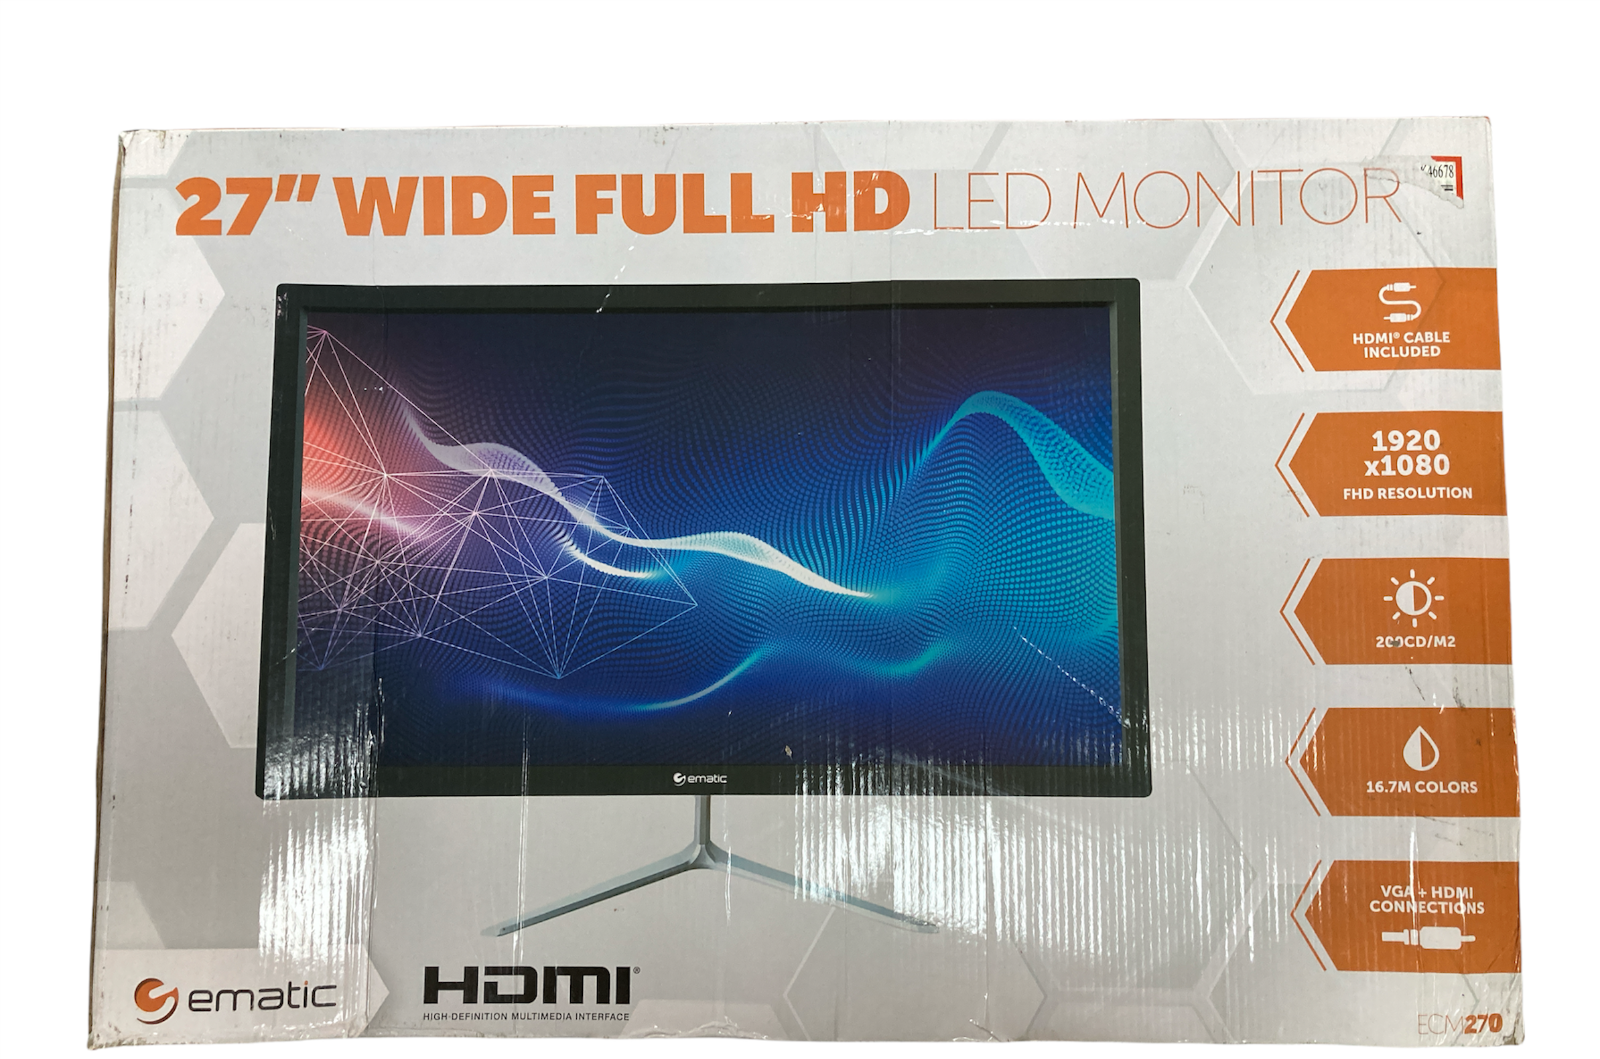 Ematic 27" Wide Full HD LED Monitor ECM270 - CRACK ON CORNER OF FRAME